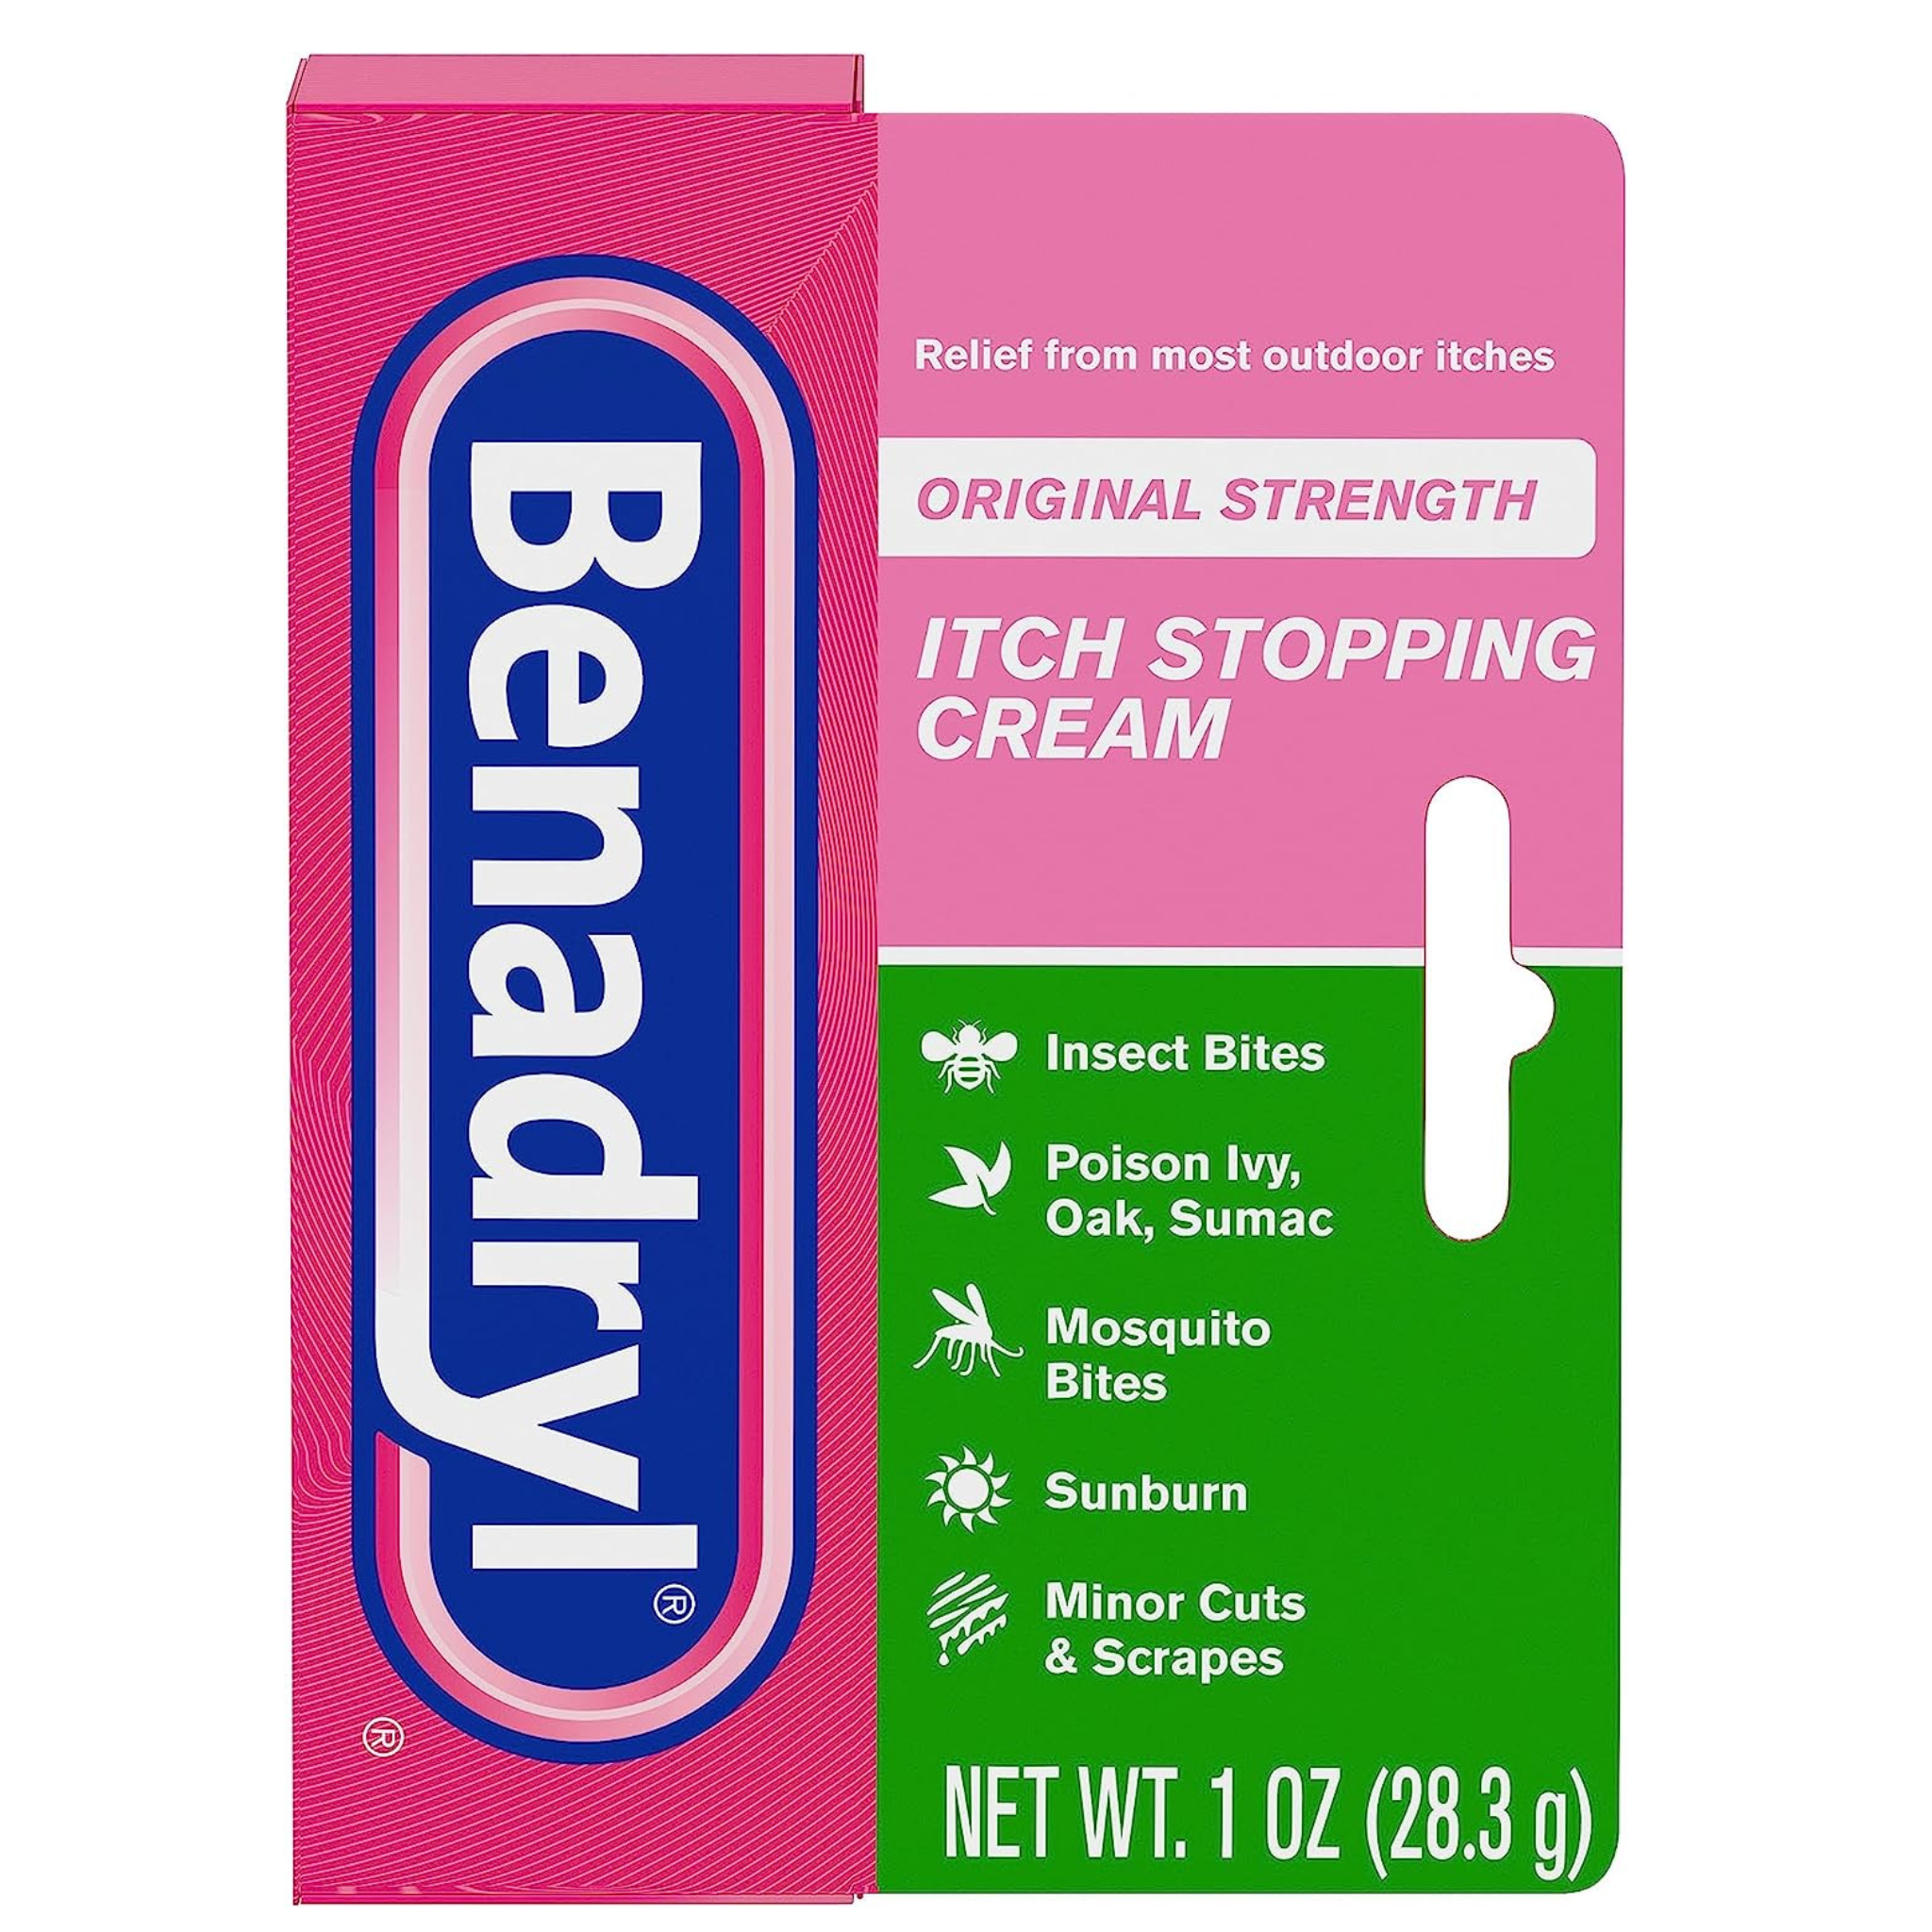 Benadryl Original Strength Itch Stopping Anti-Itch Cream (1 Oz)